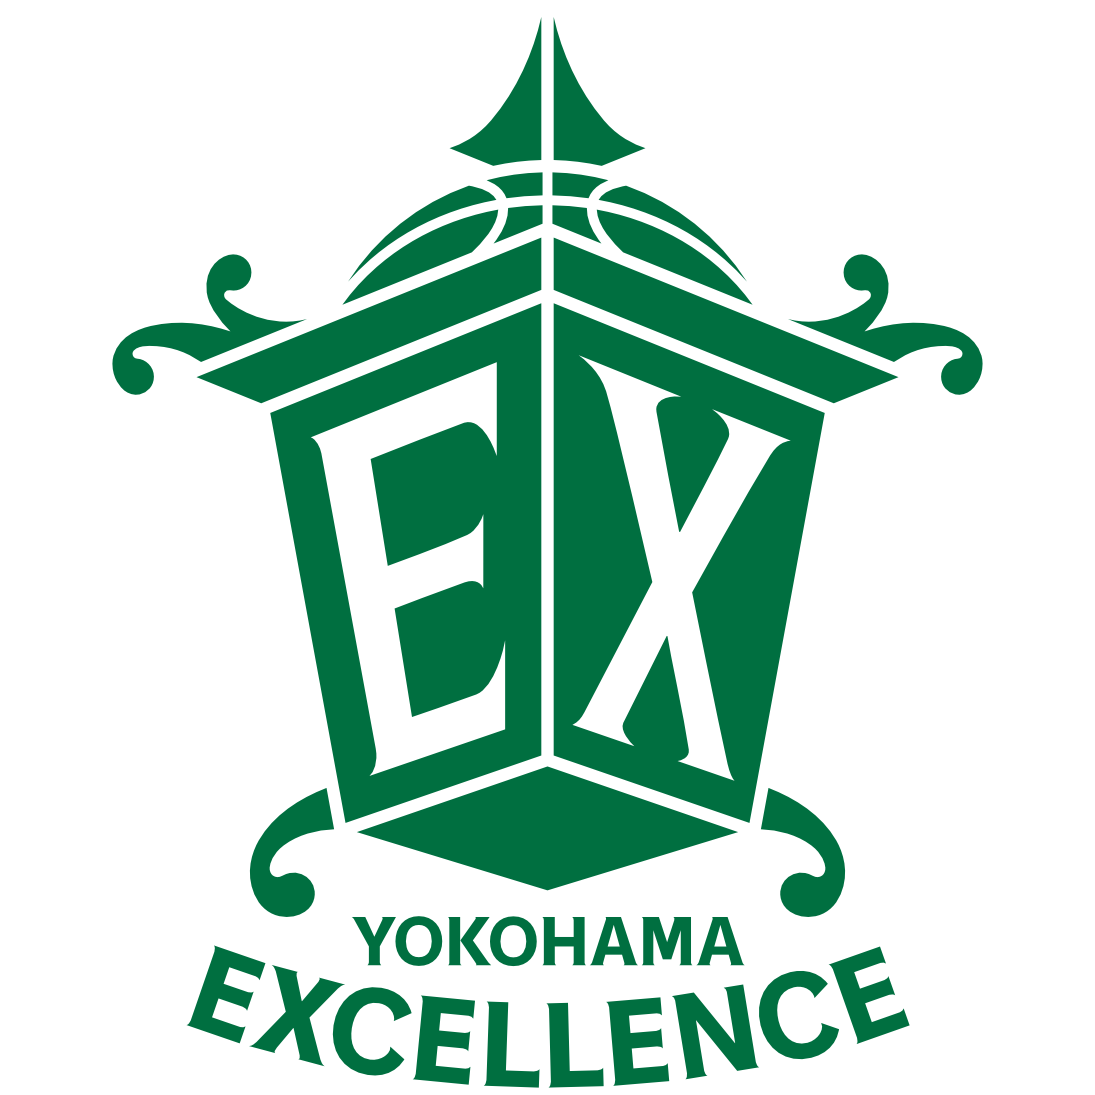 YOKOHAMA EXCELLENCE